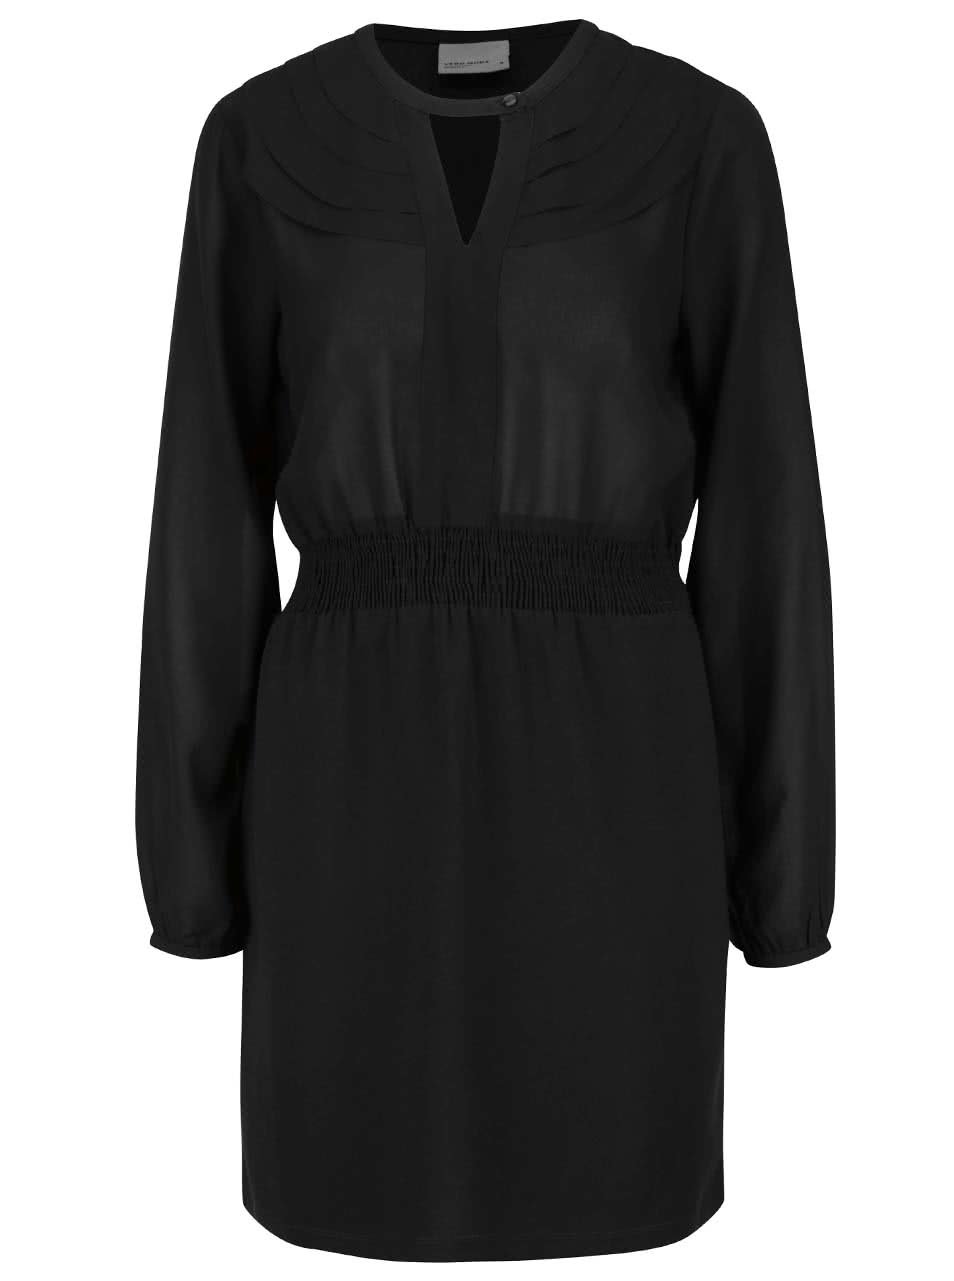 Černé šaty s dlouhým rukávem a knoflíkem v dekoltu Vero Moda Lova